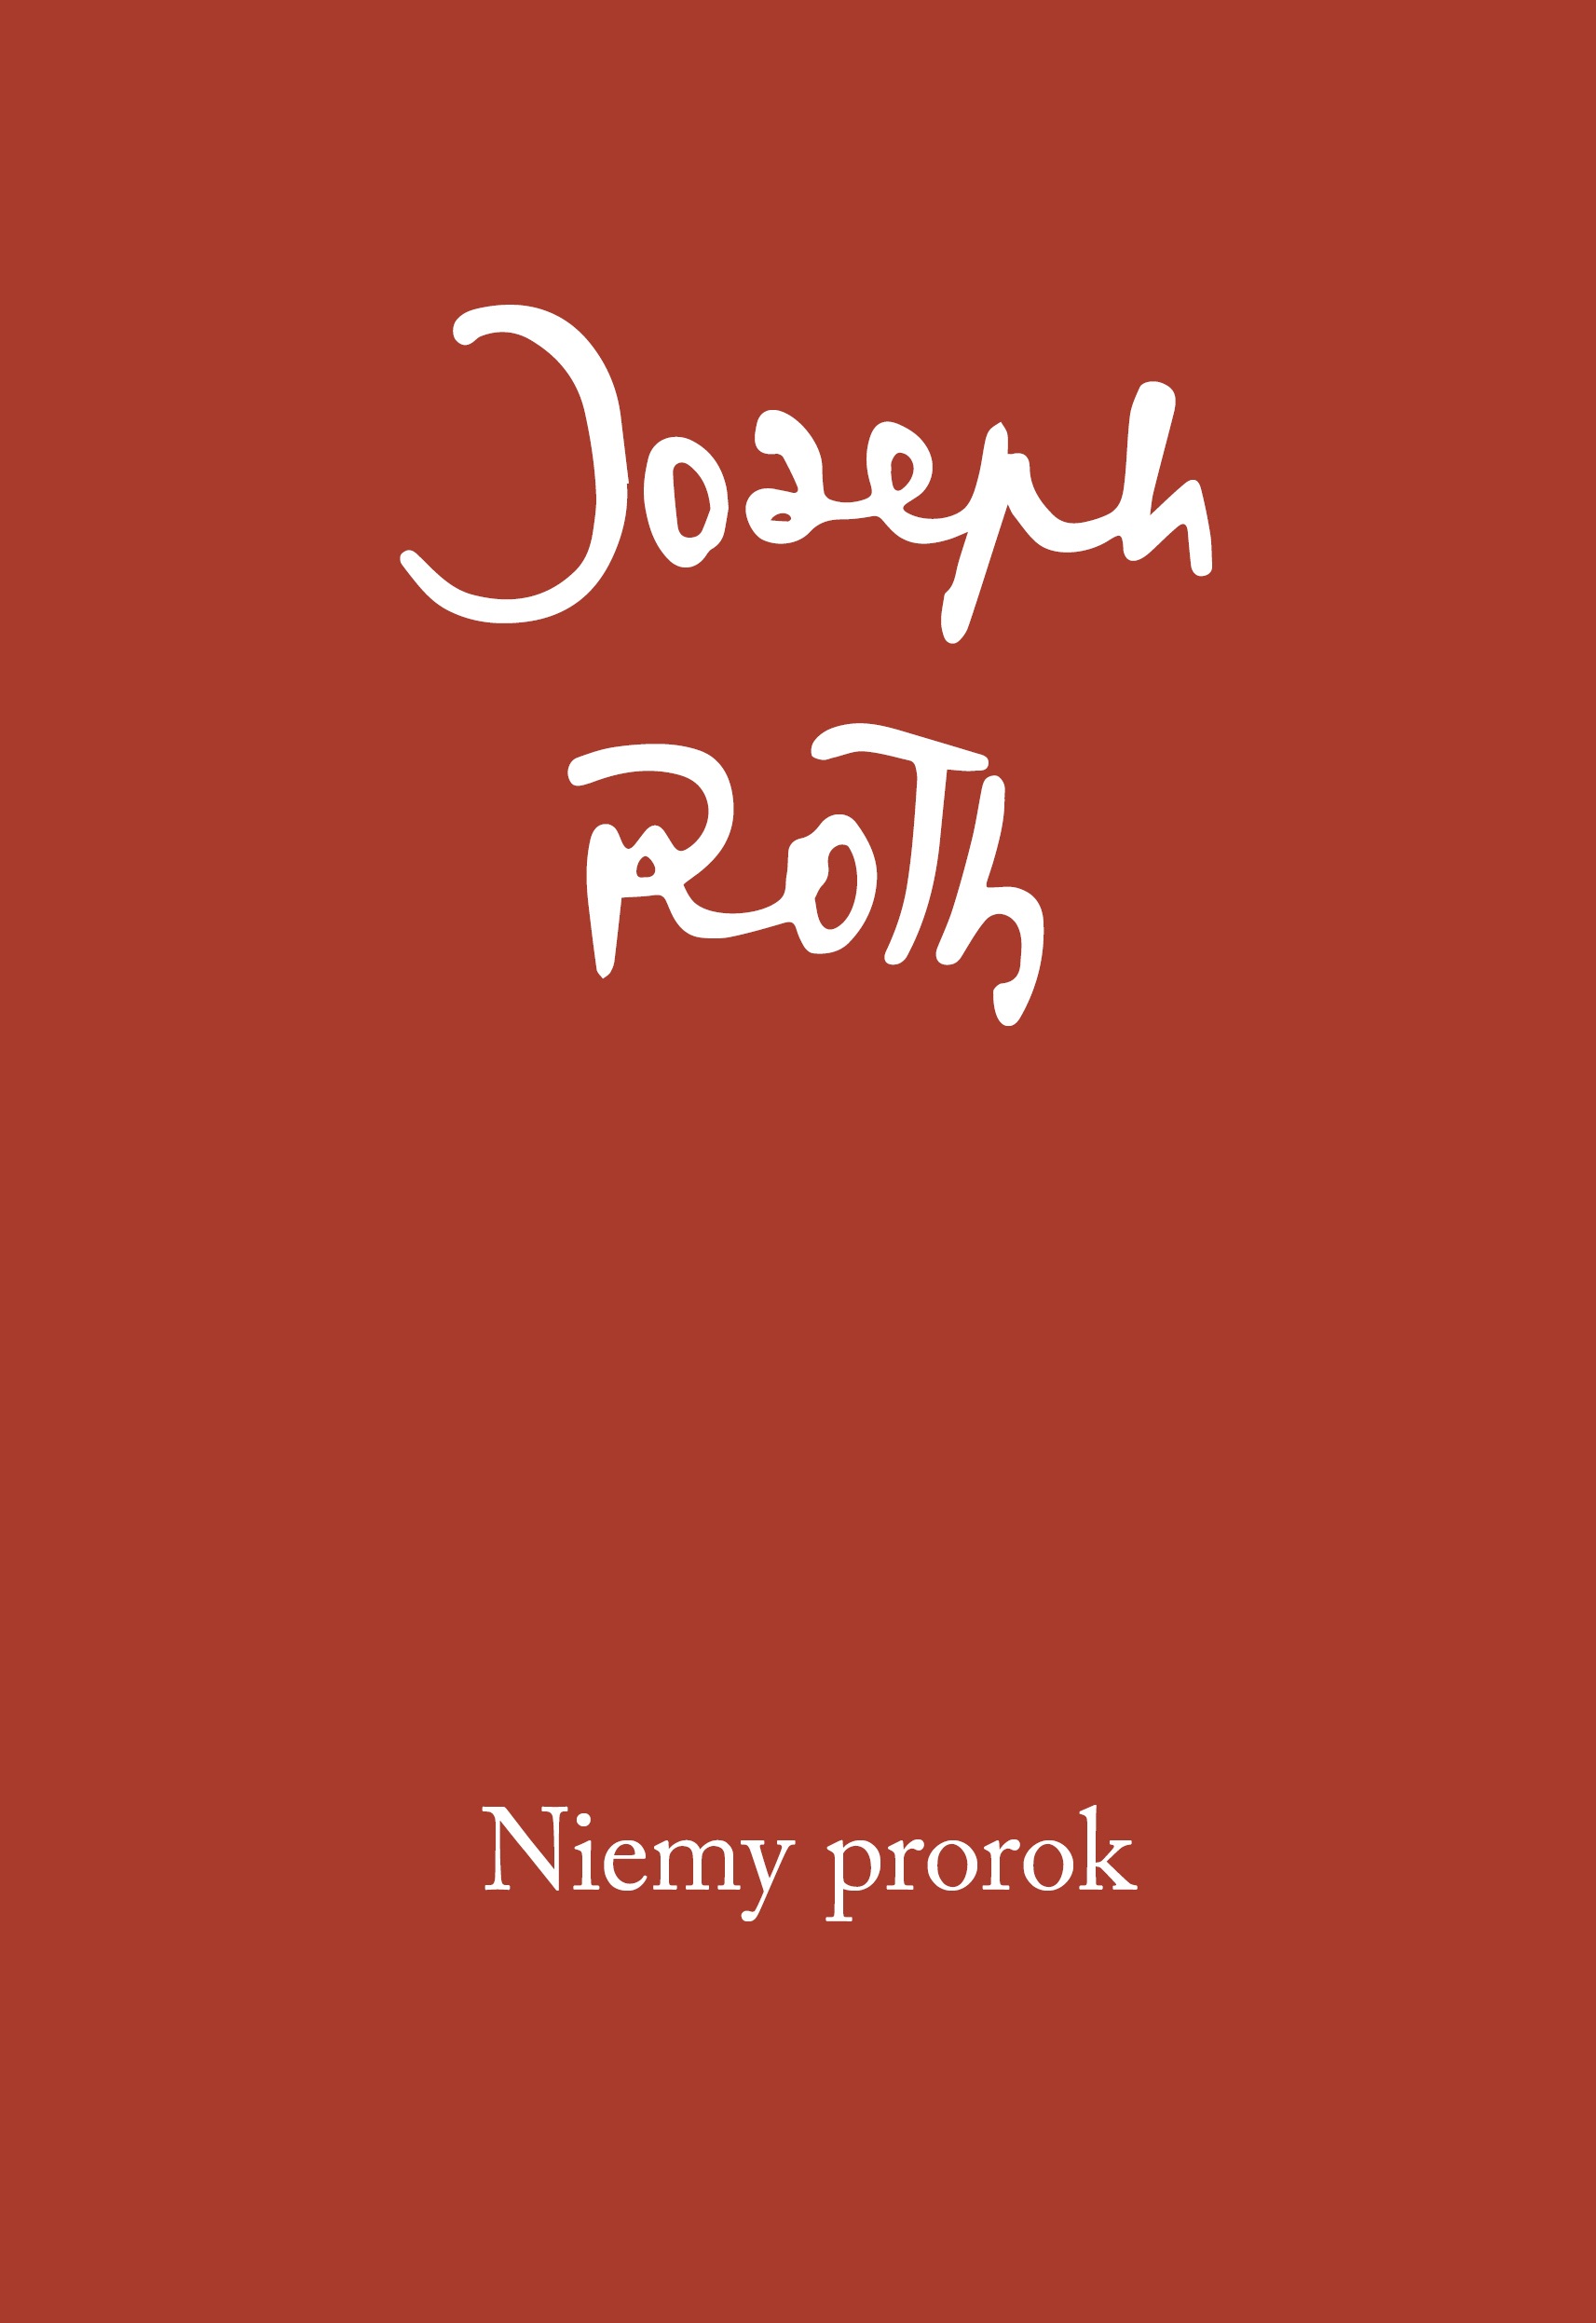 Joseph Roth, Niemy prorok, Austeria, 2022